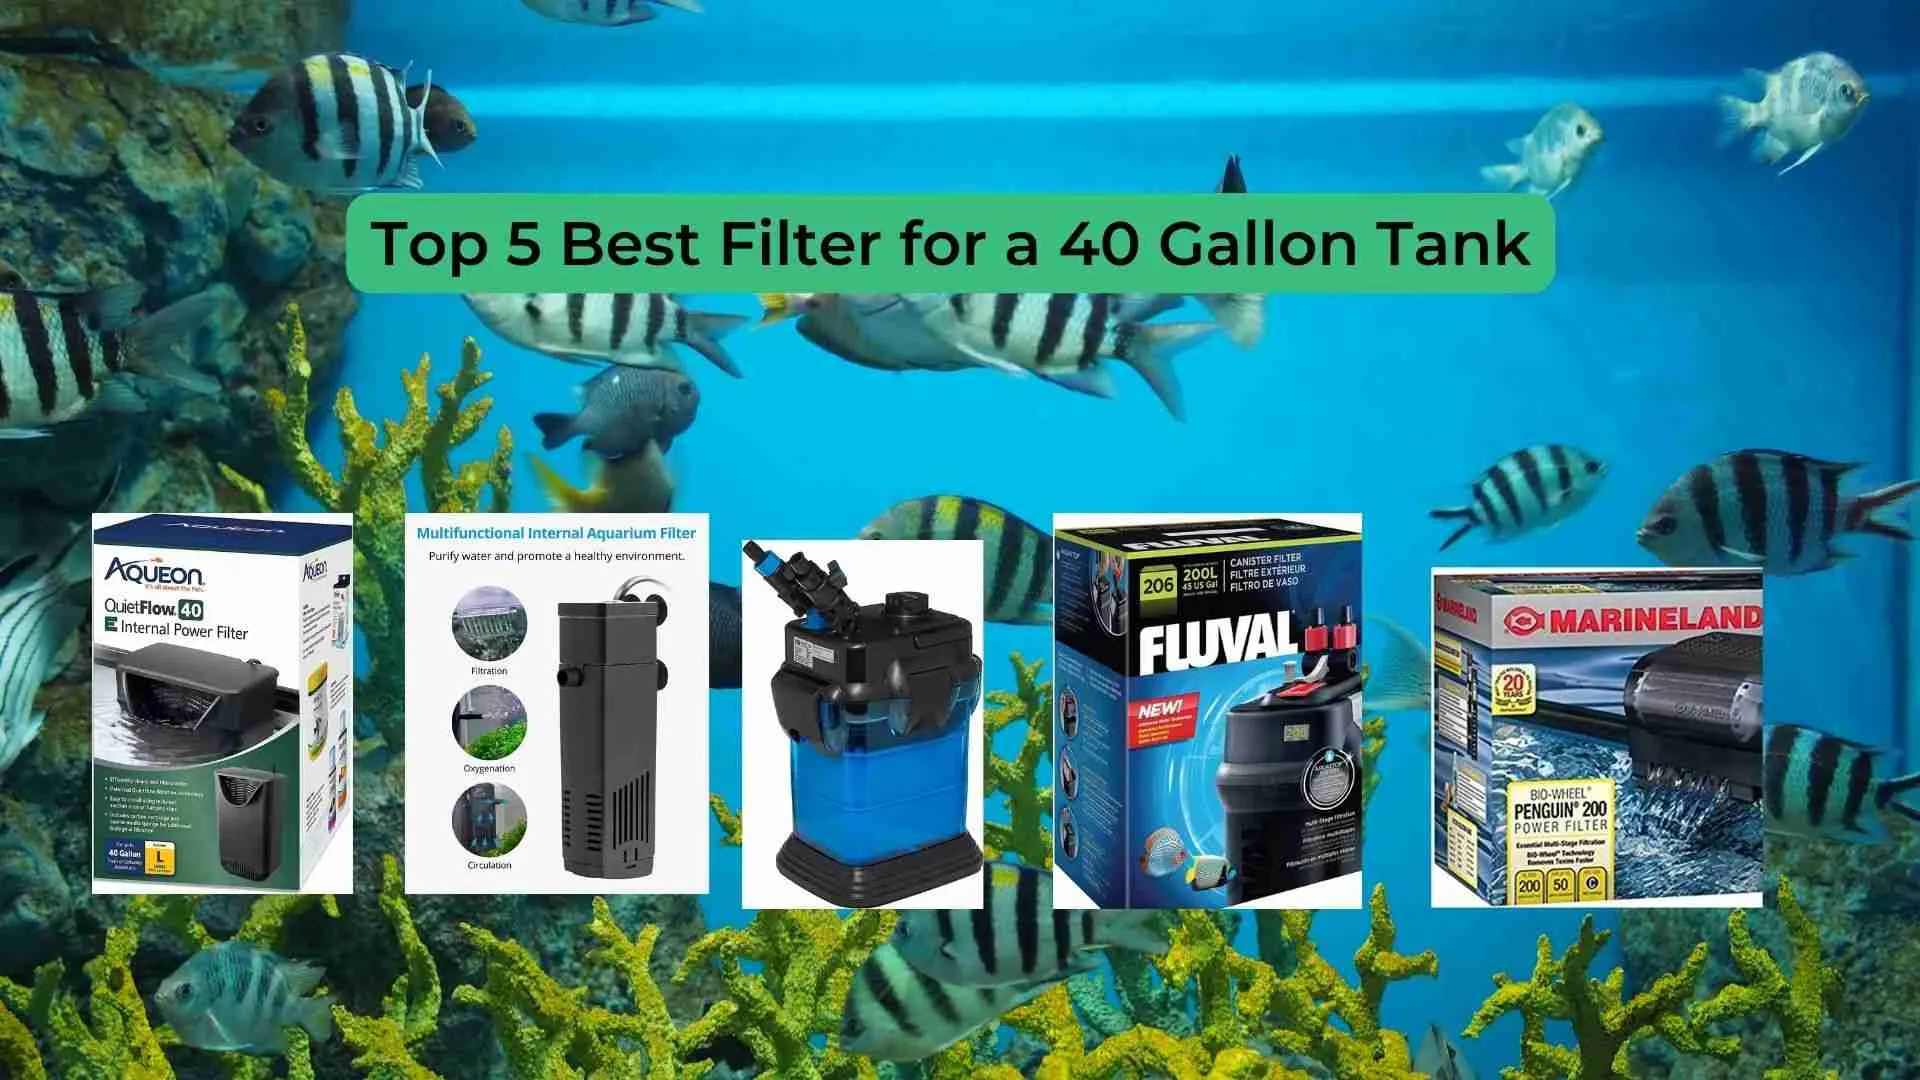 Top 5 Best Filter for a 40 Gallon Tank